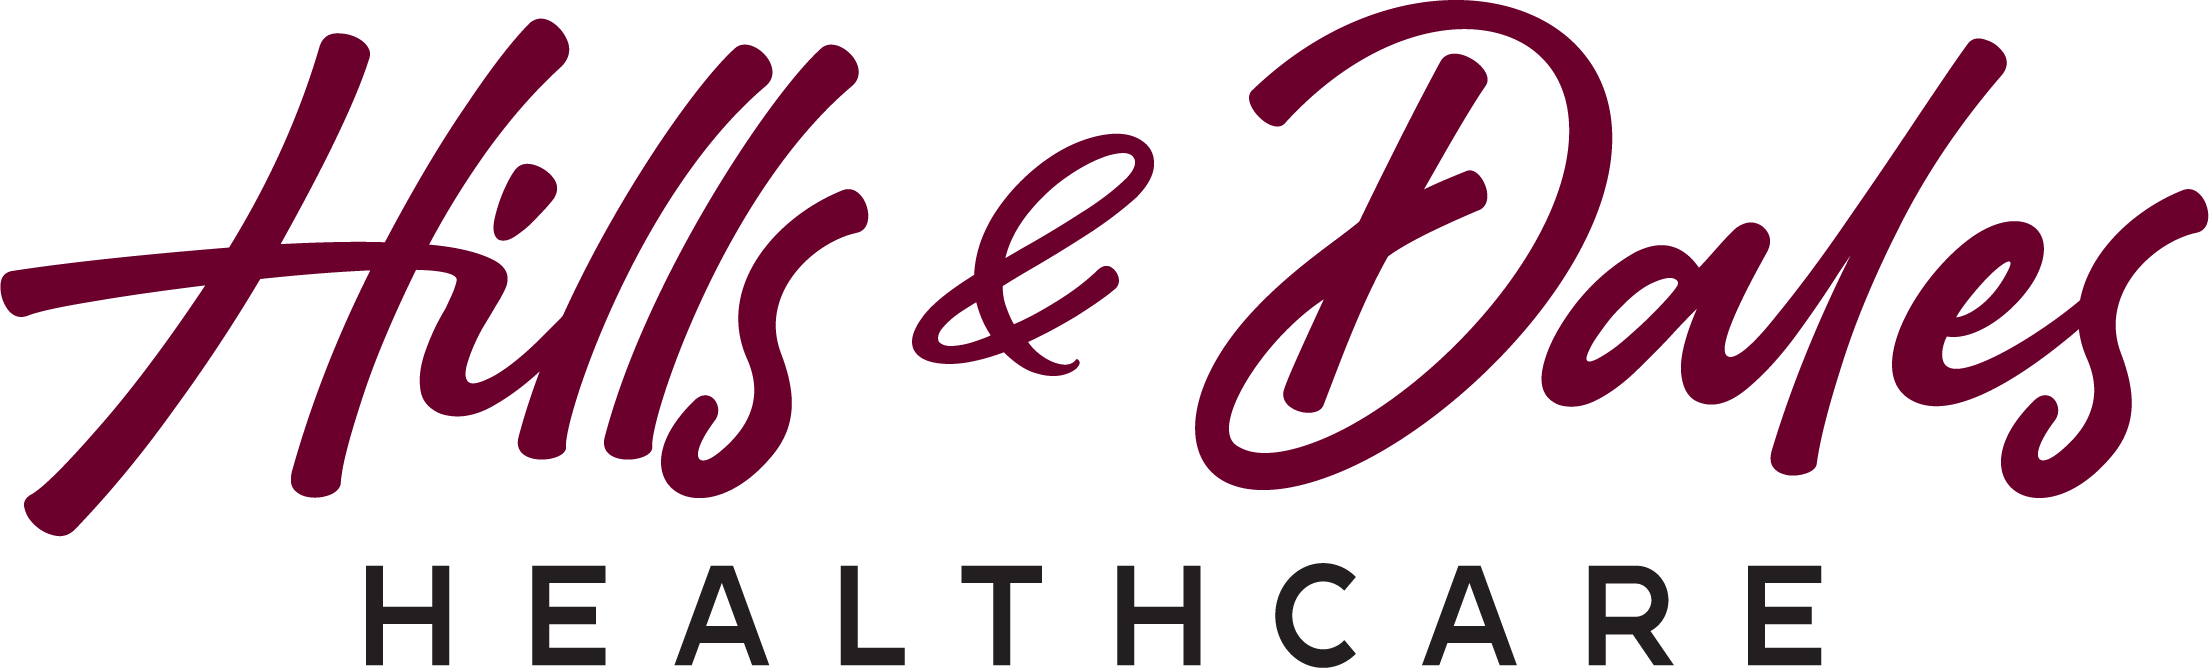 Hills & Dales Healthcare